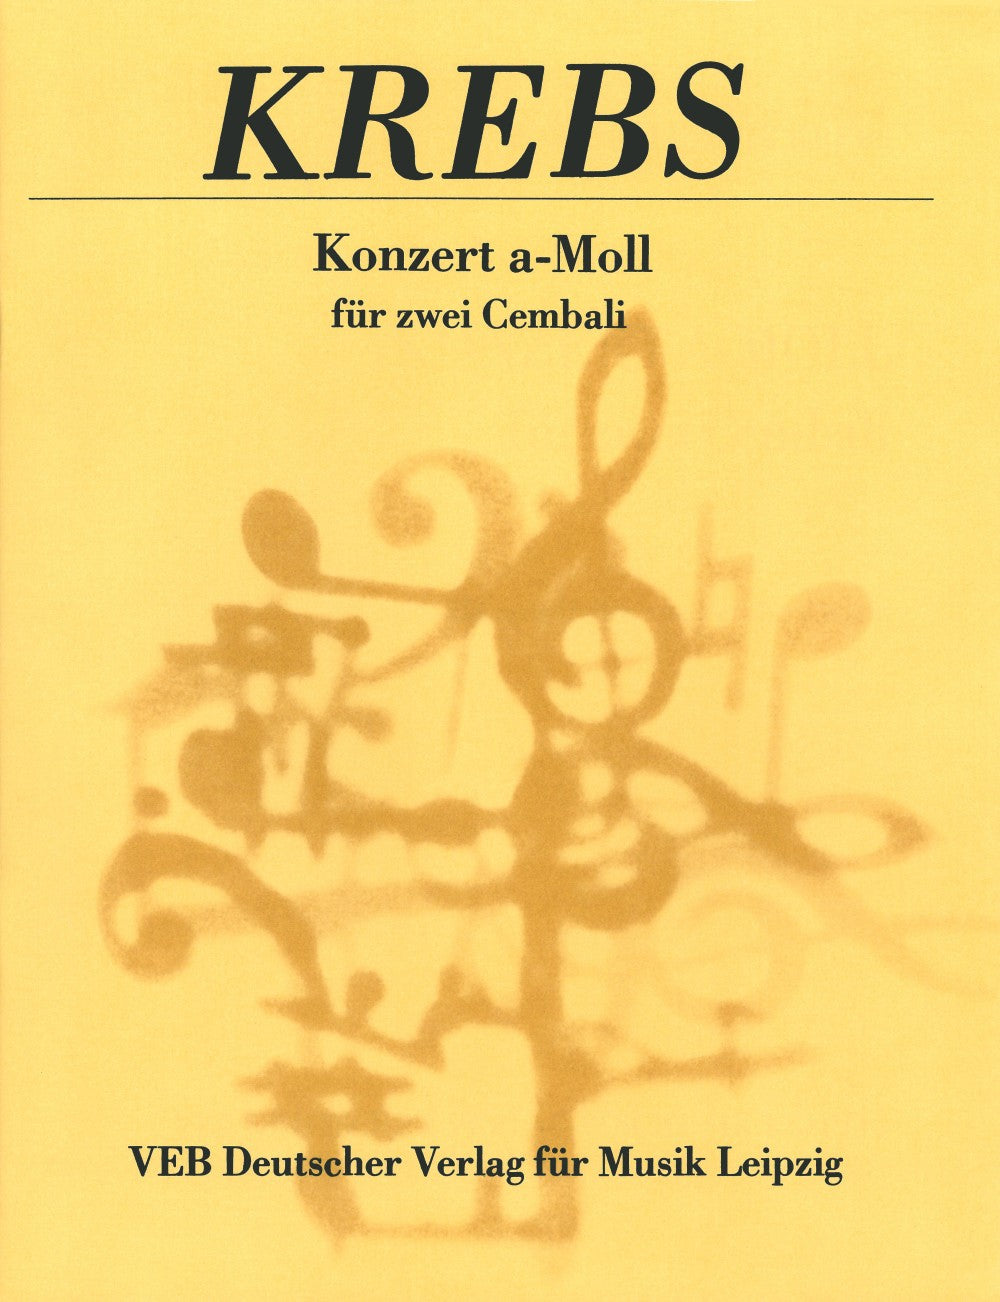 Krebs: Concerto for 2 Harpsichords in A Minor